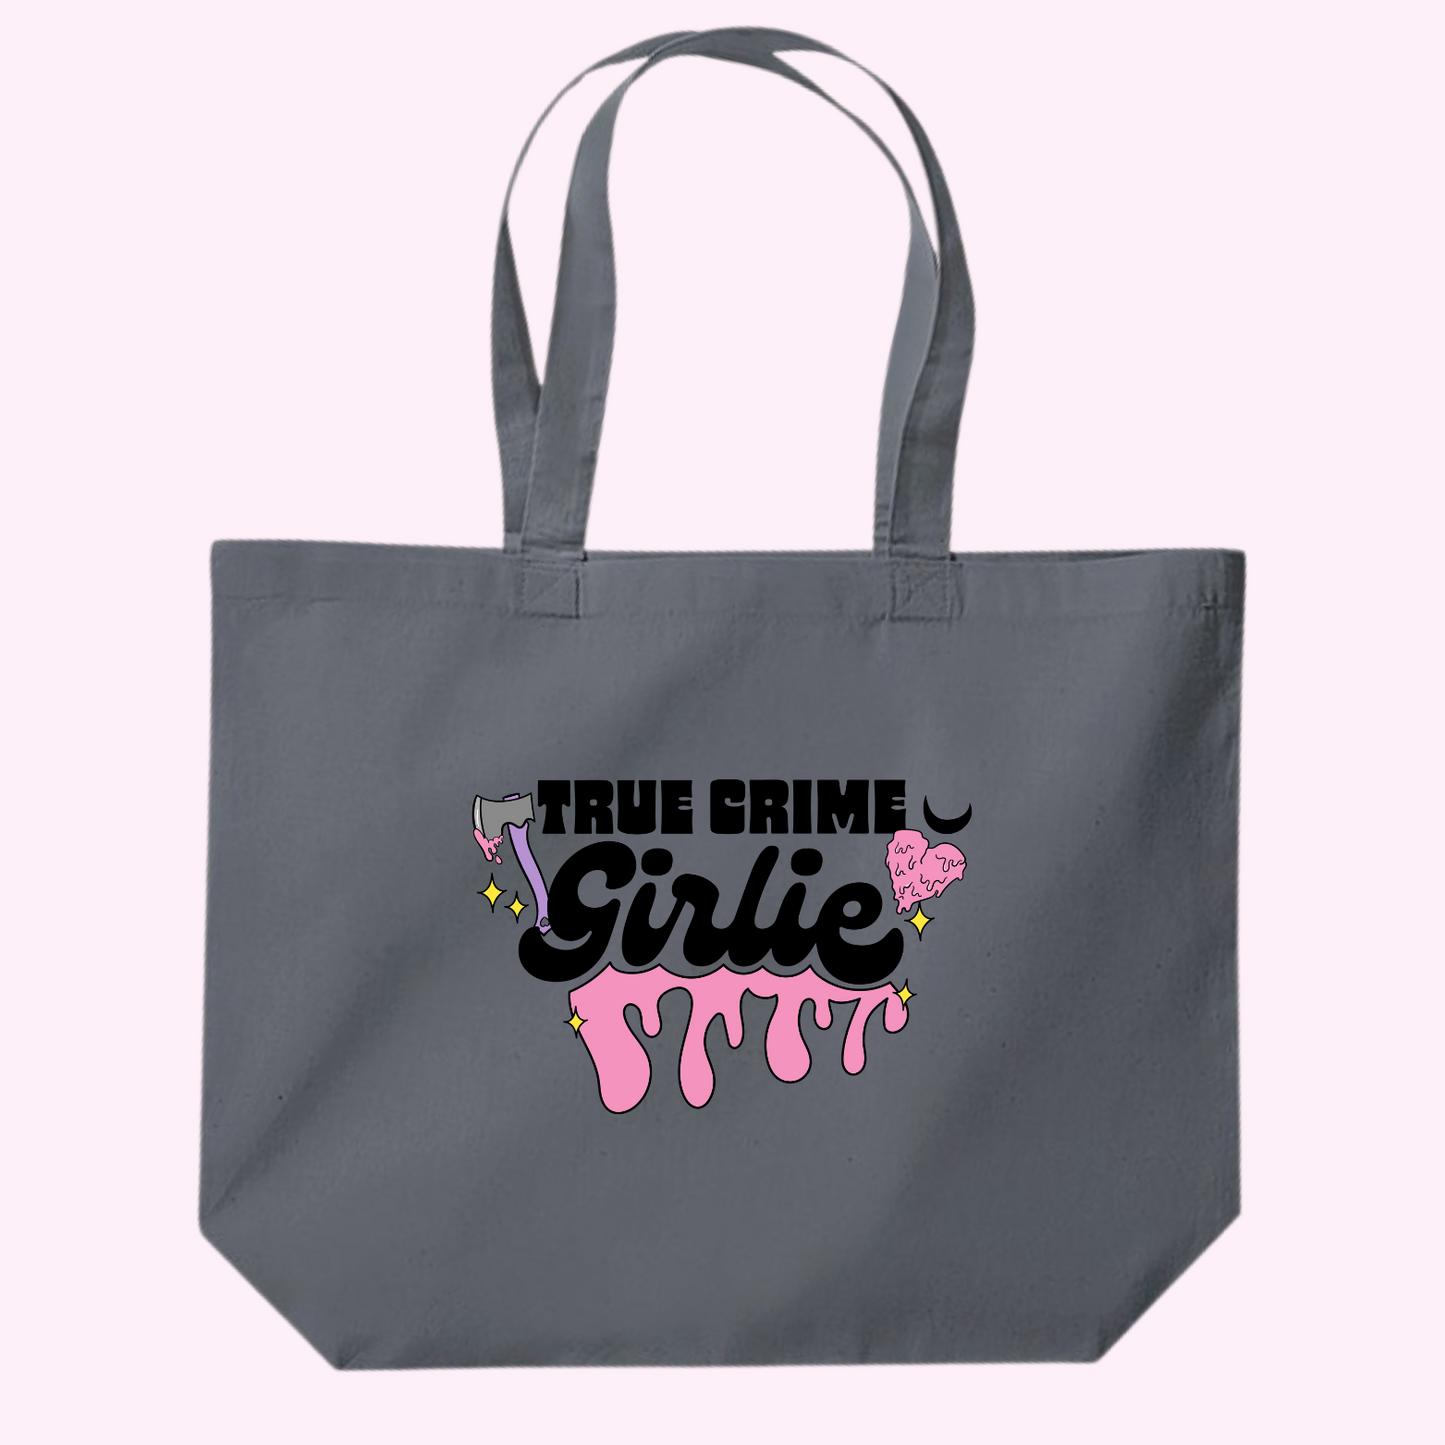 TRUE CRIME GIRLIE SHOPPER TOTE BAG